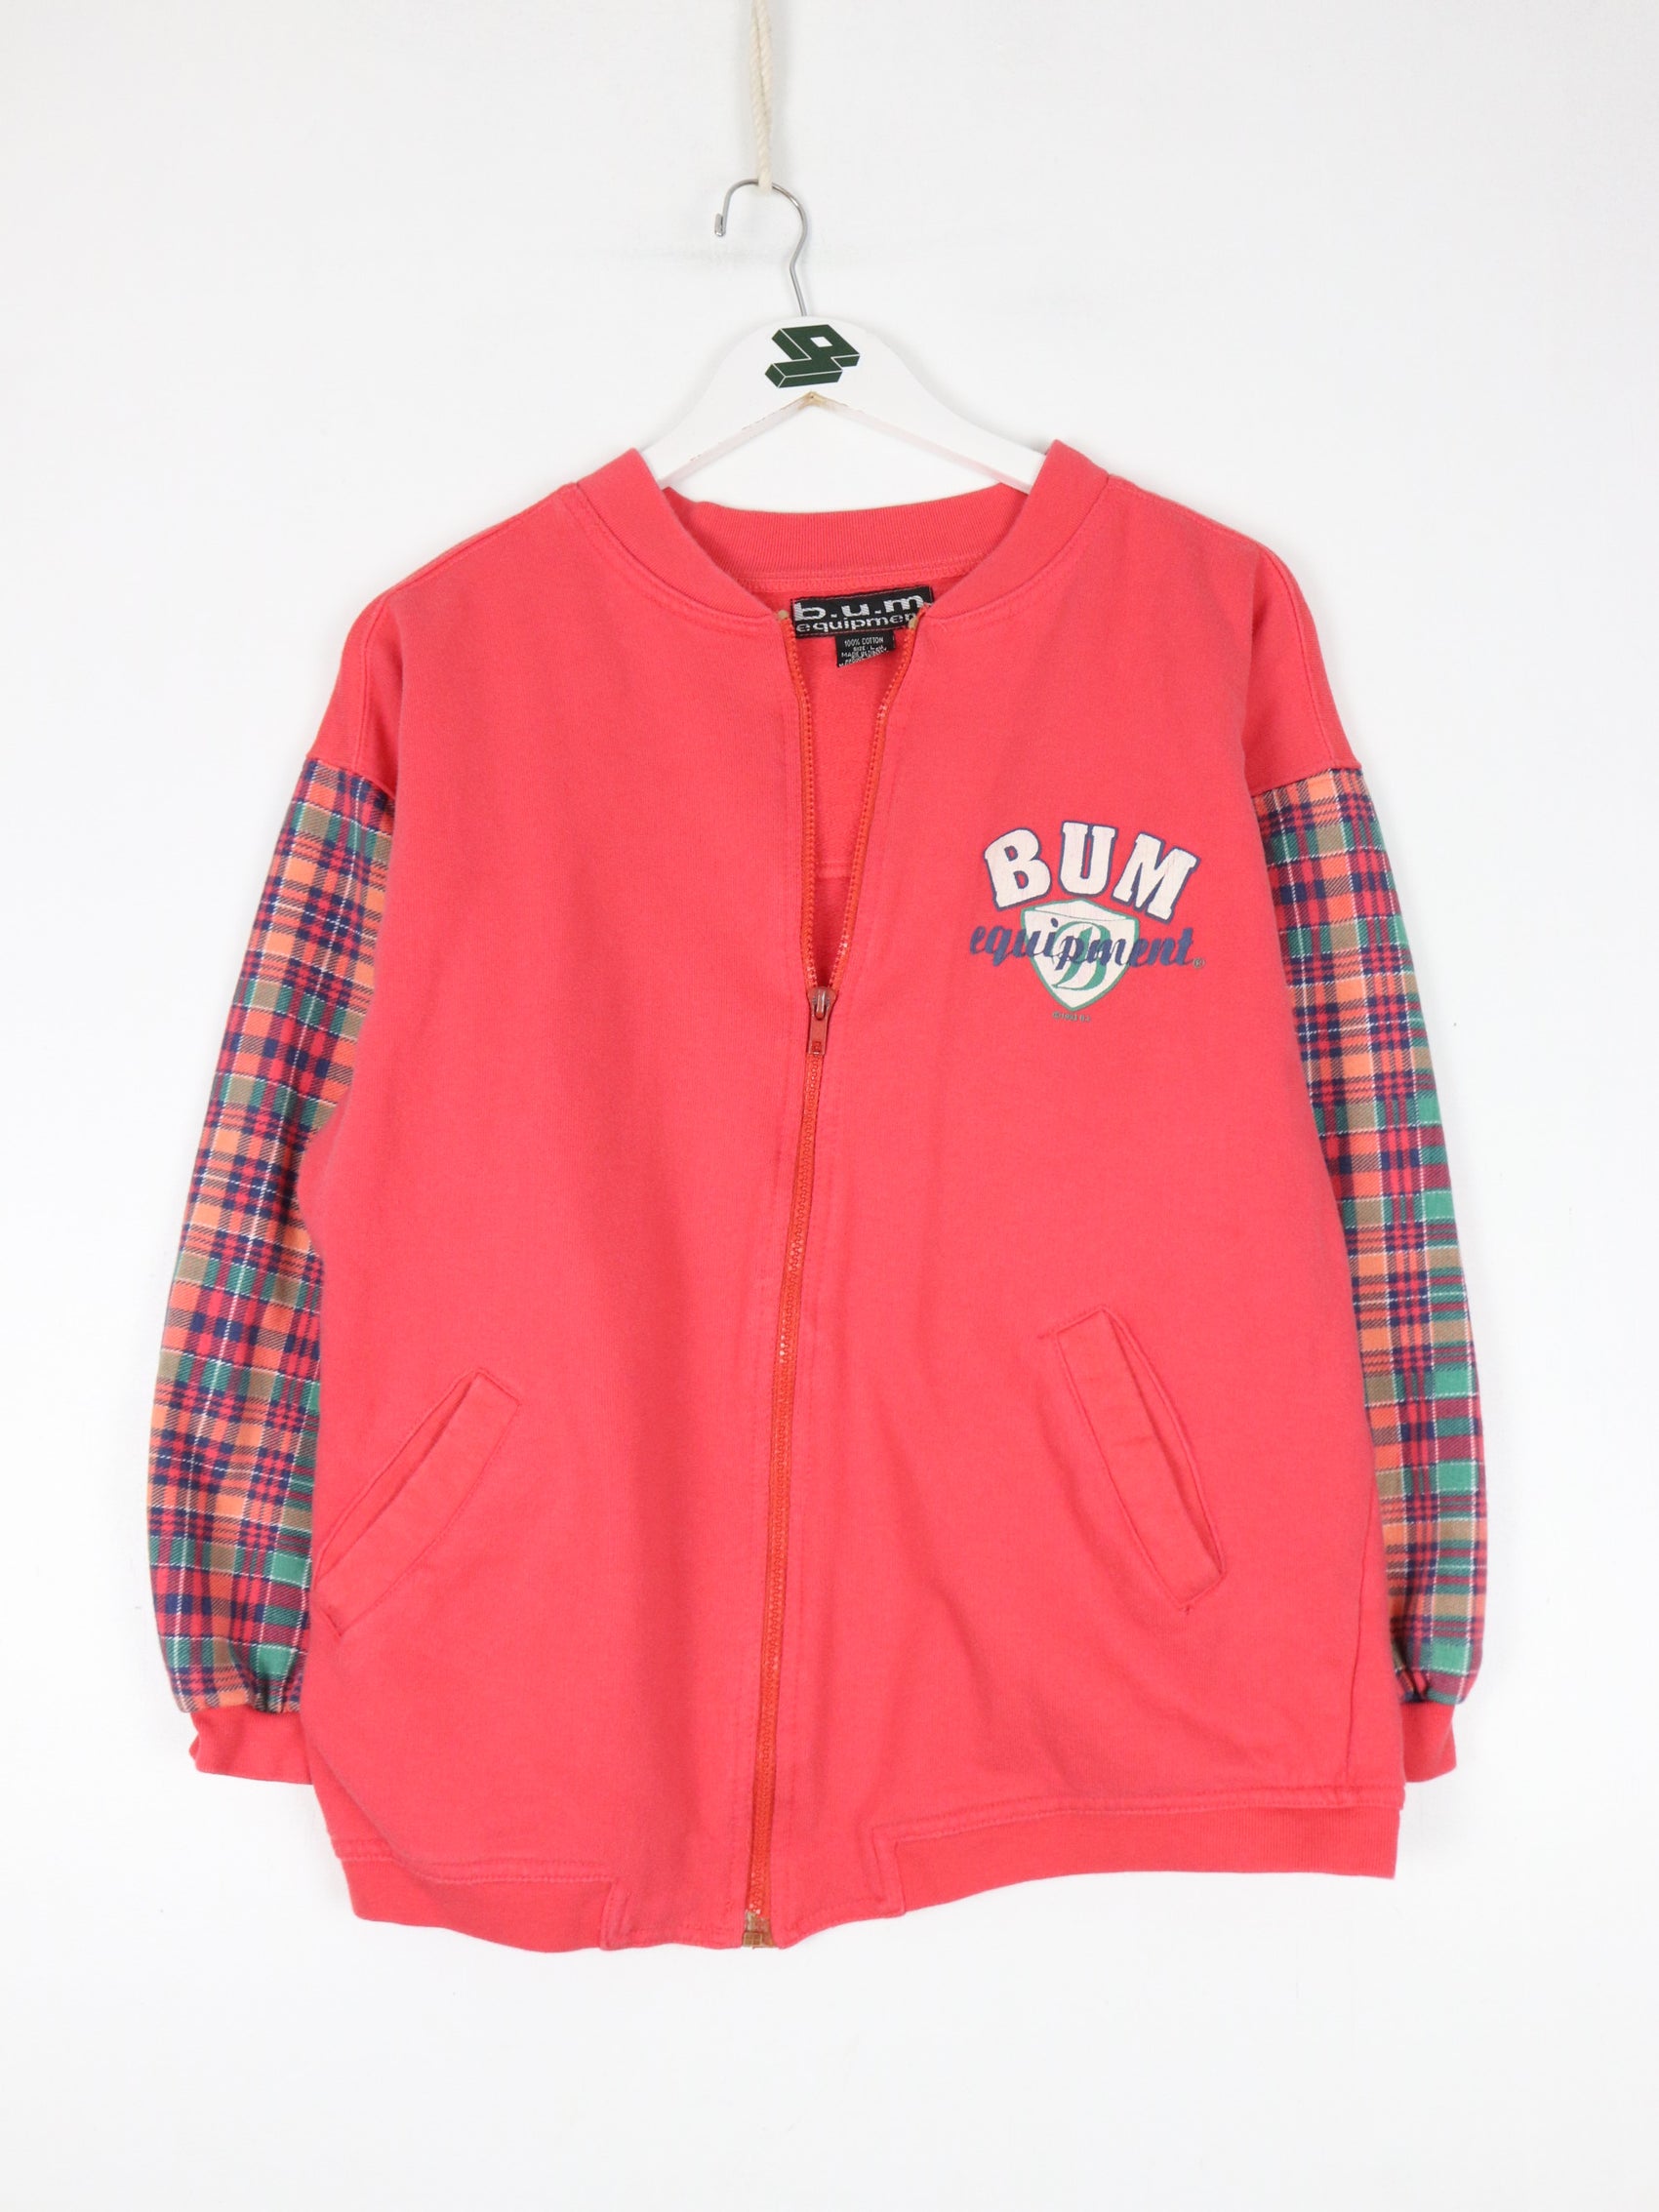 Vintage B.U.M. Equipment Sweatshirt Fits Mens Small Red Full Zip